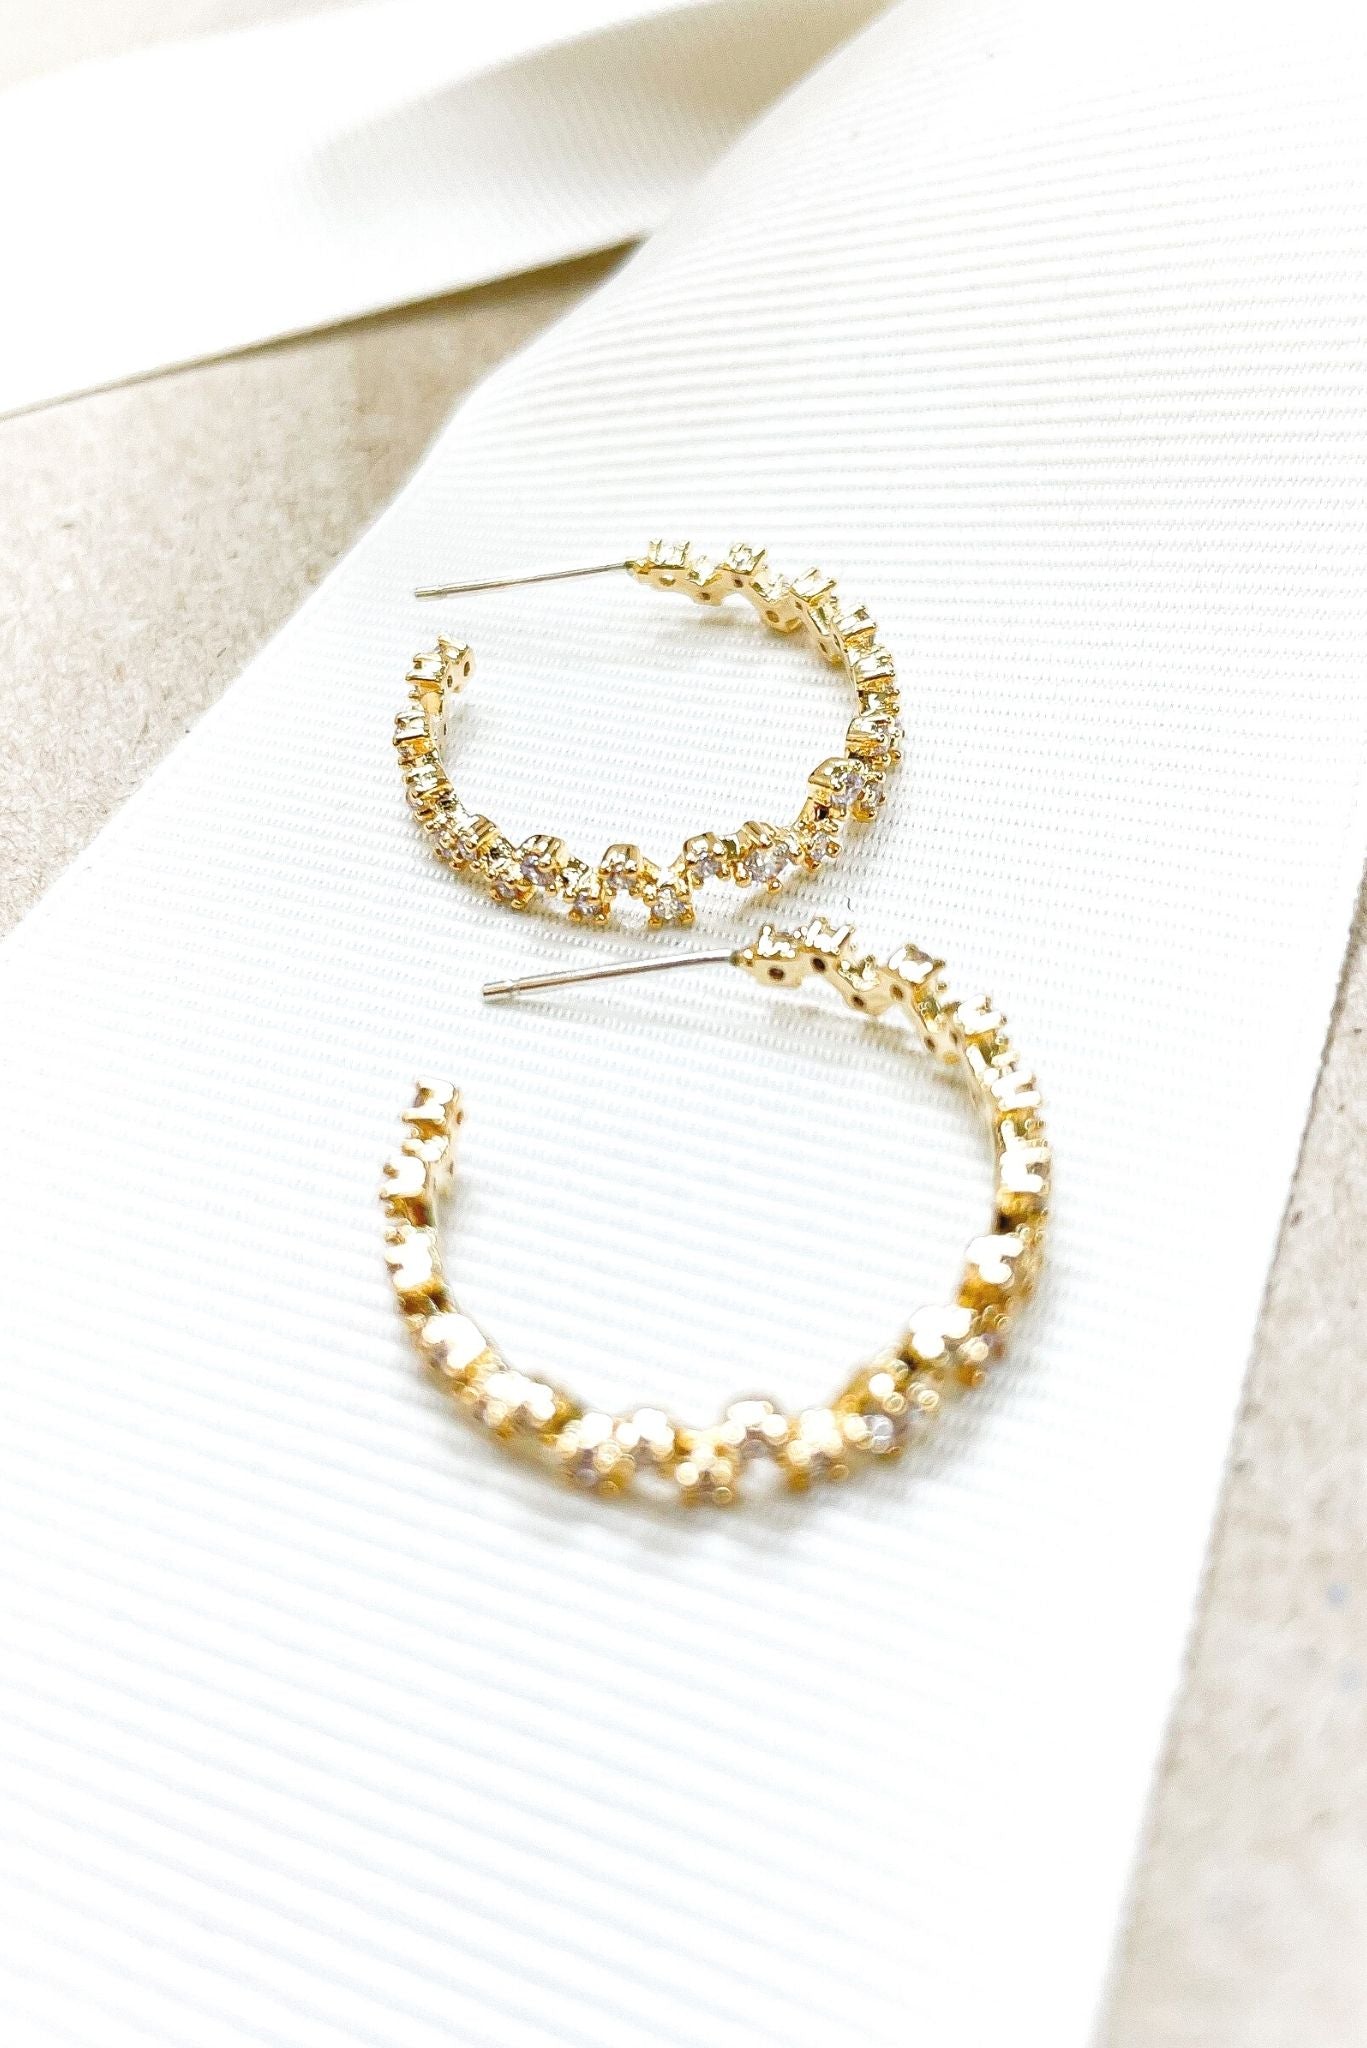 Gold Delicate Rhinestone Hoop Earrings*FINAL SALE*